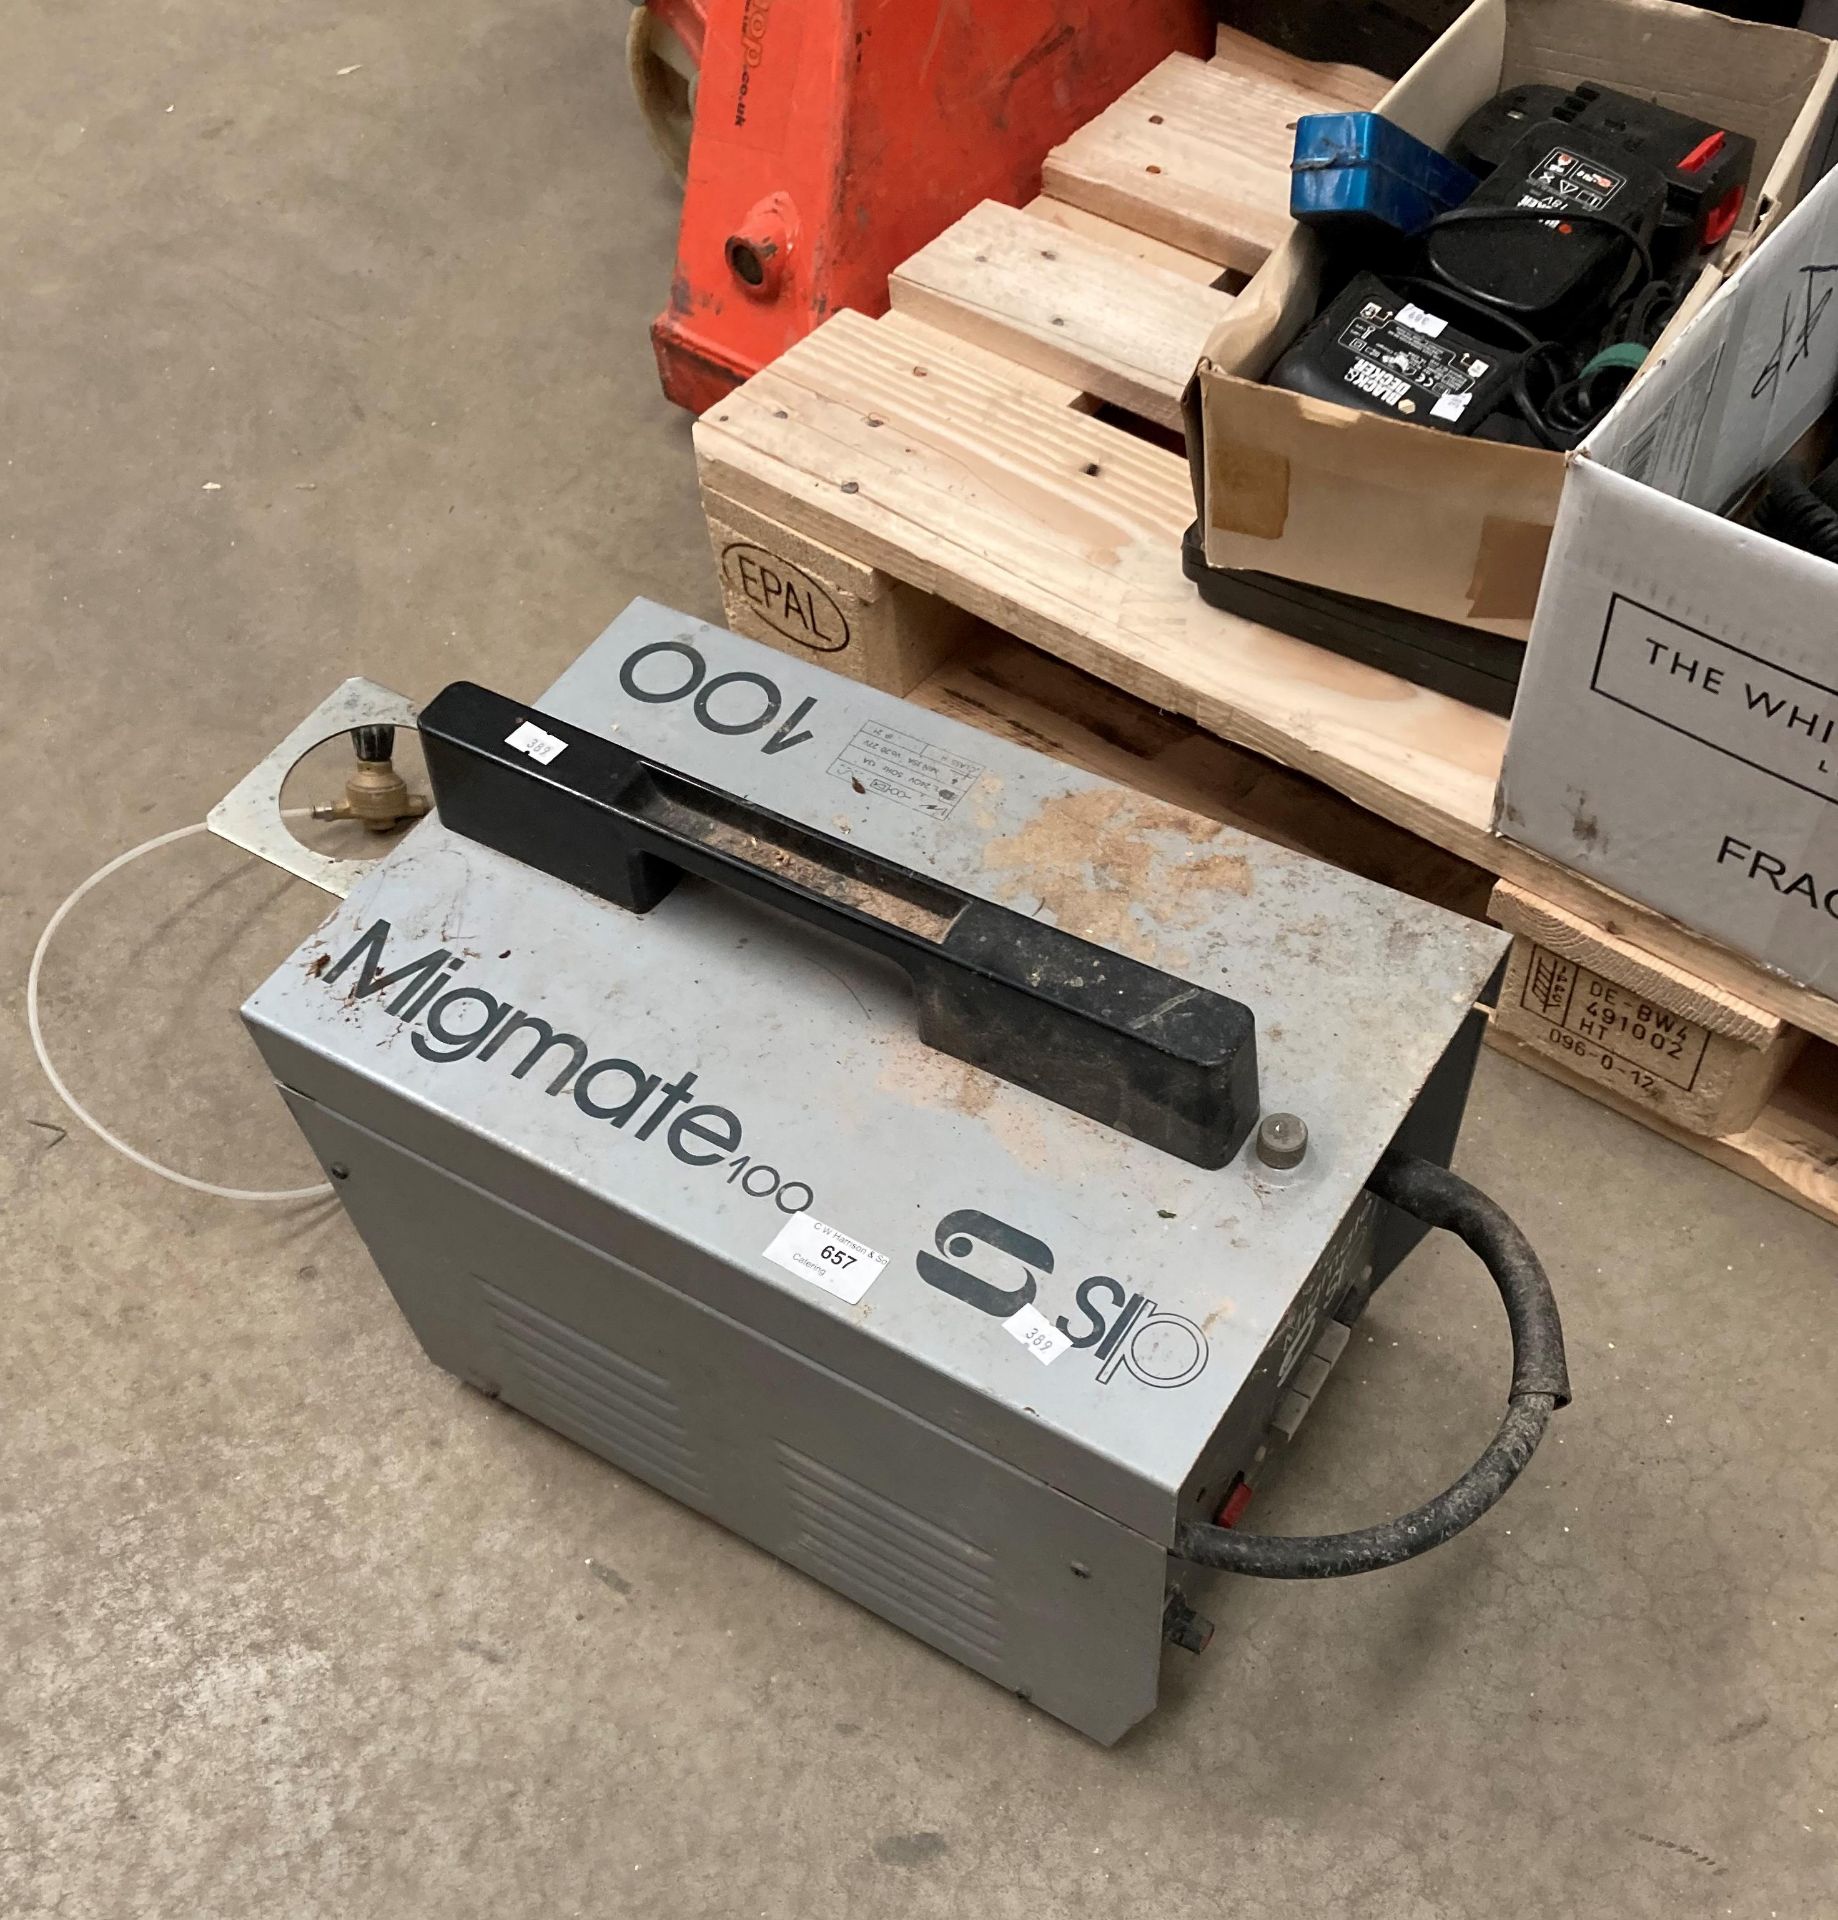 An SIP Migmate 100 portable welder (saleroom location: K01 floor)